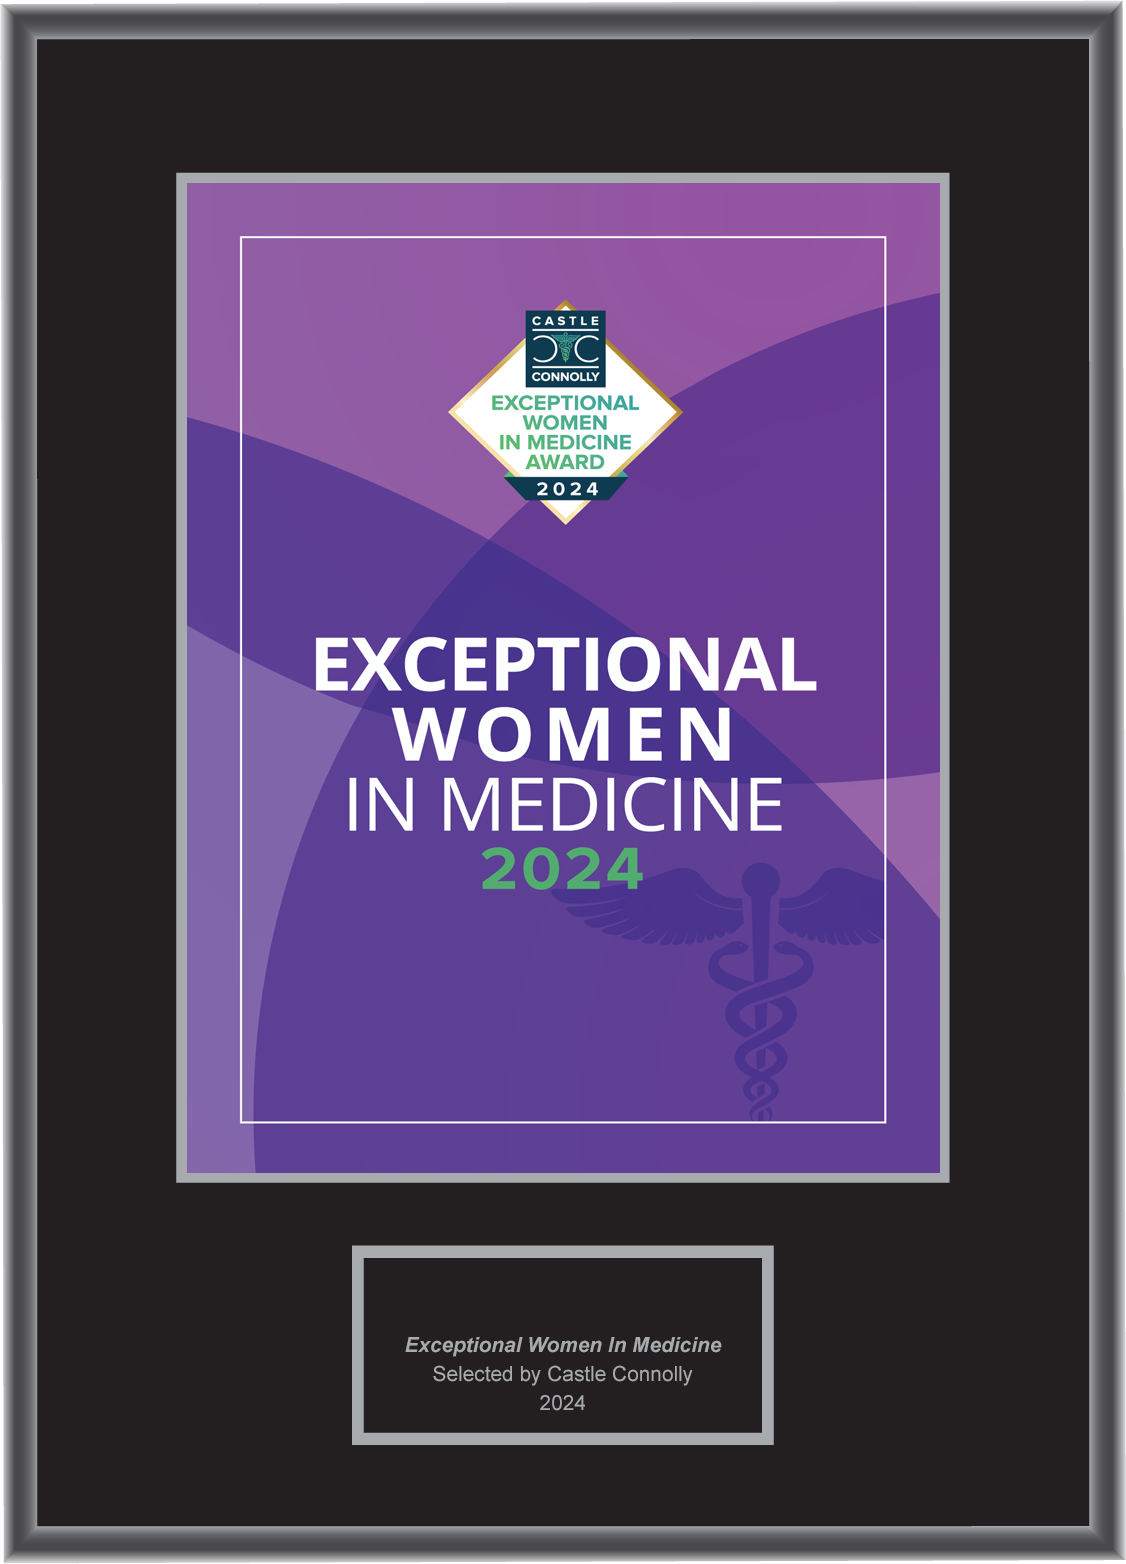 Exceptional Women in Medicine 2024